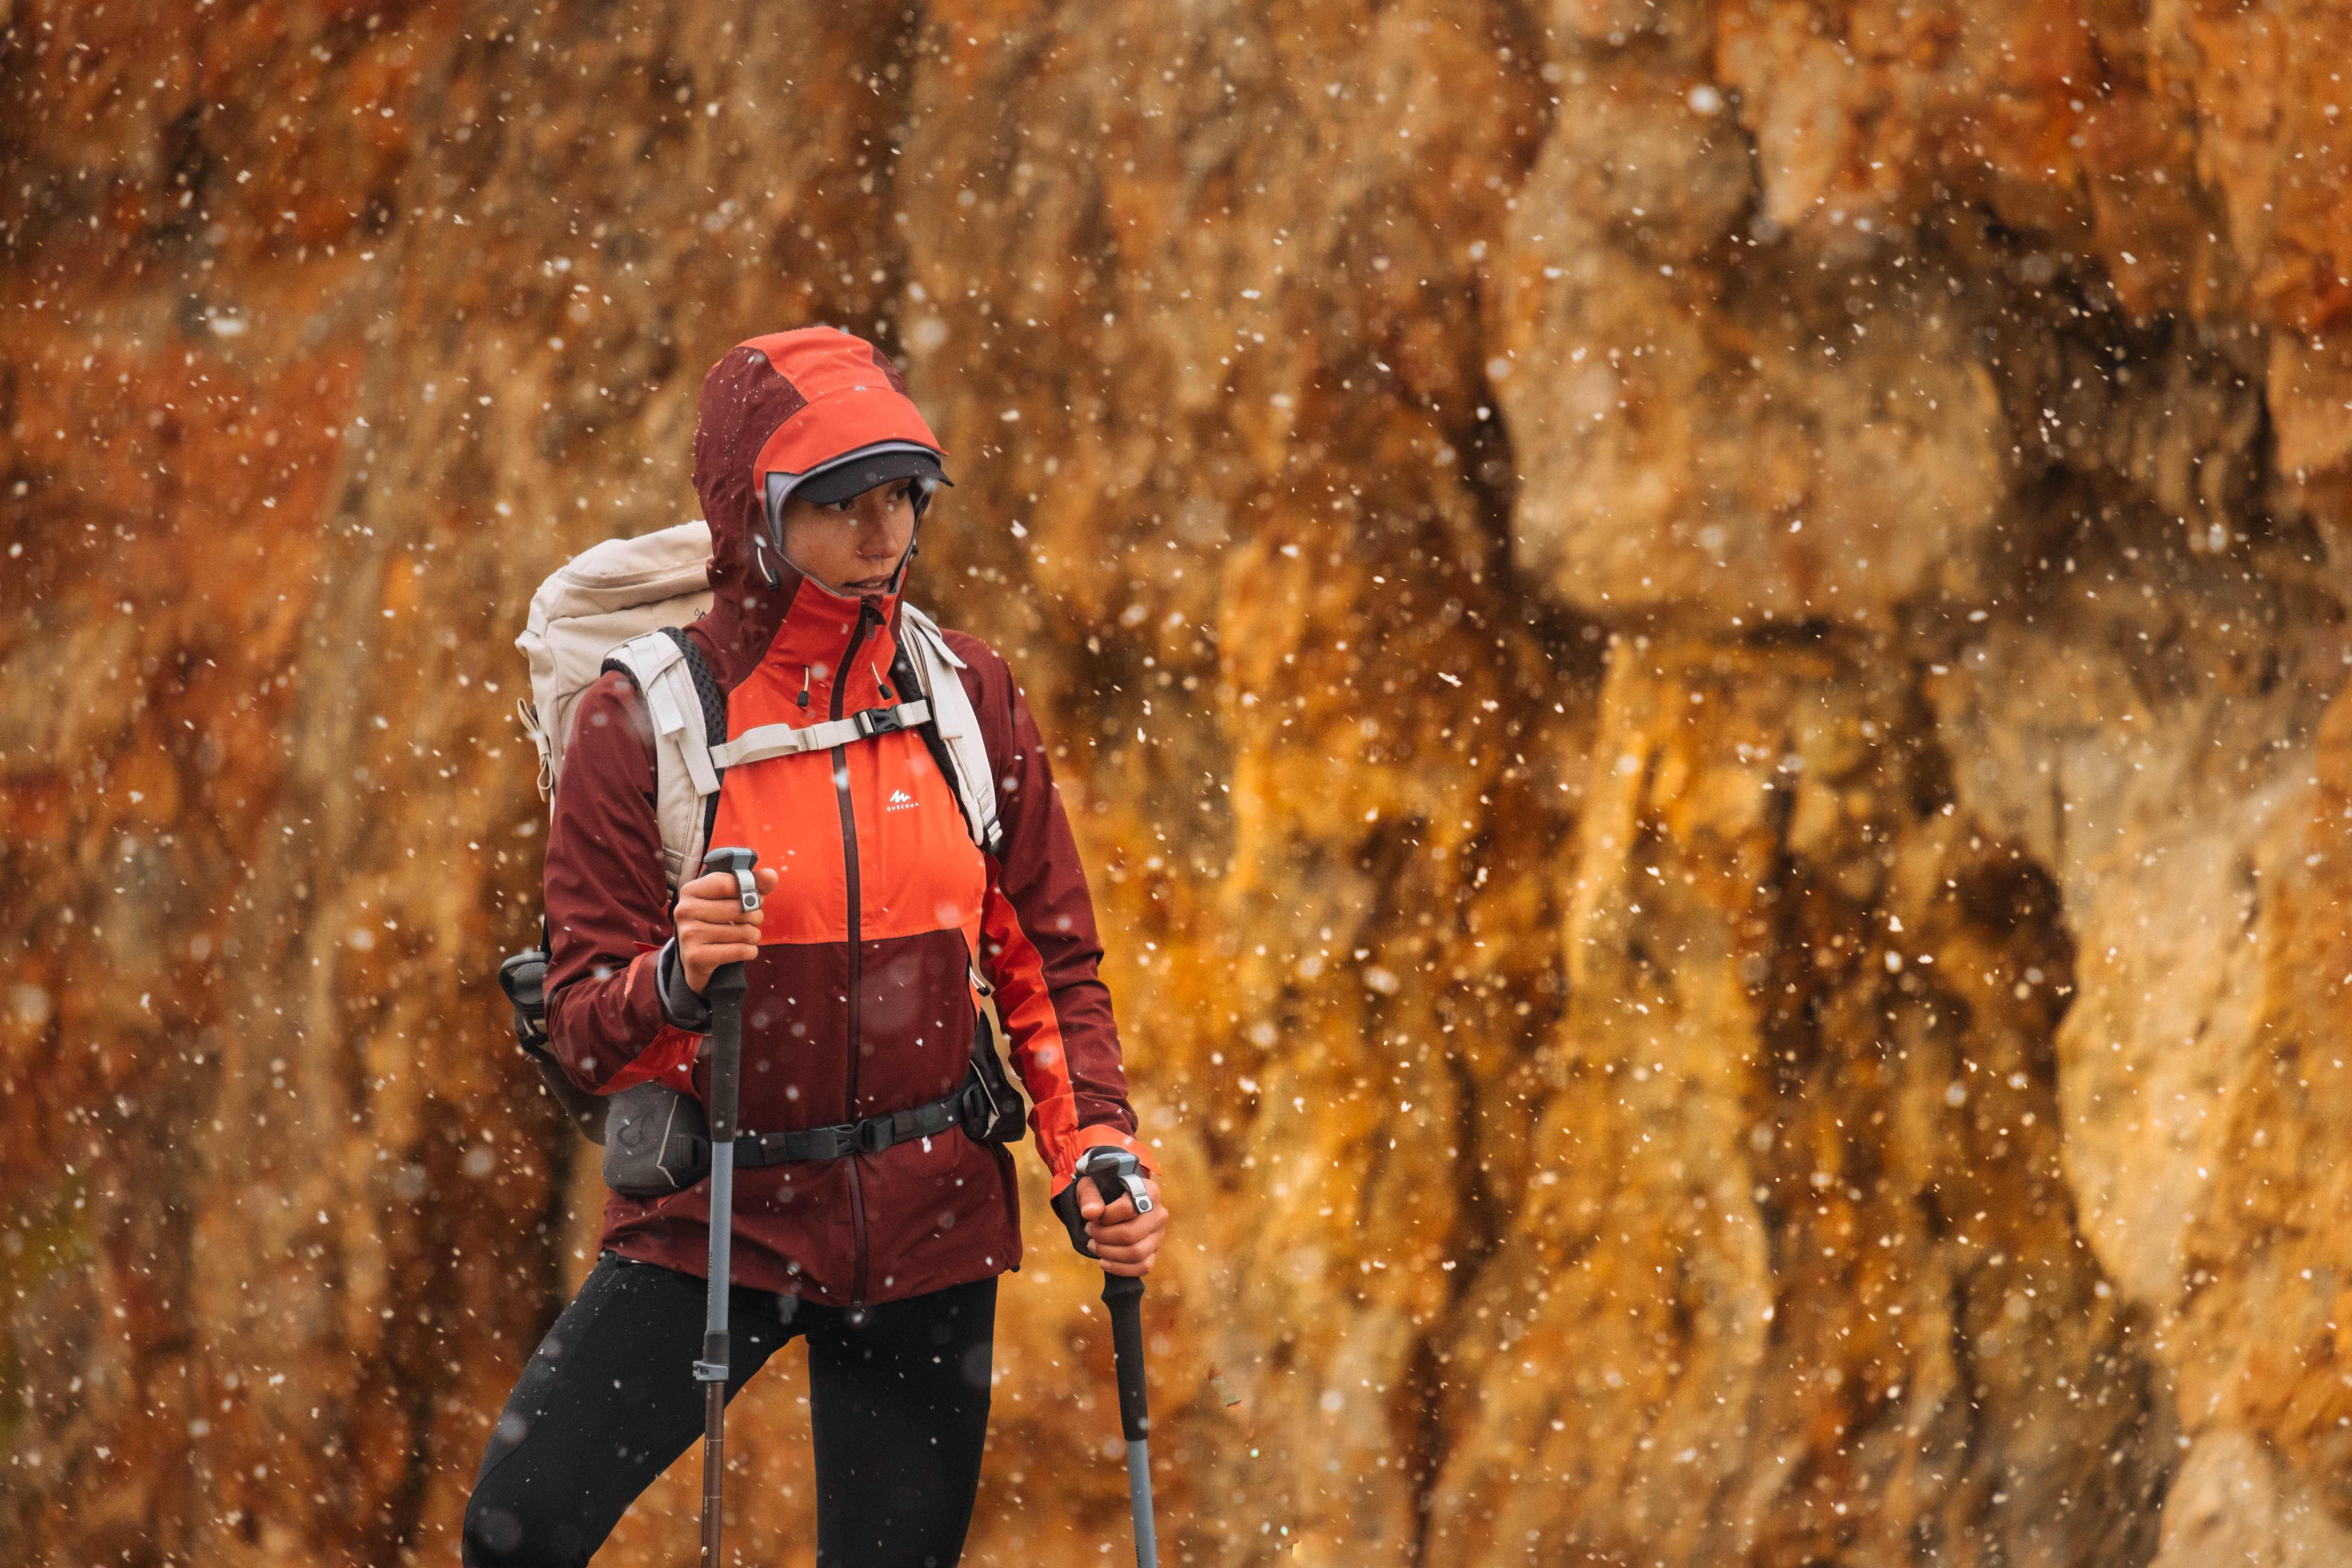 Women's Waterproof Hiking Jacket - MH 500 Red - Chocolate truffle